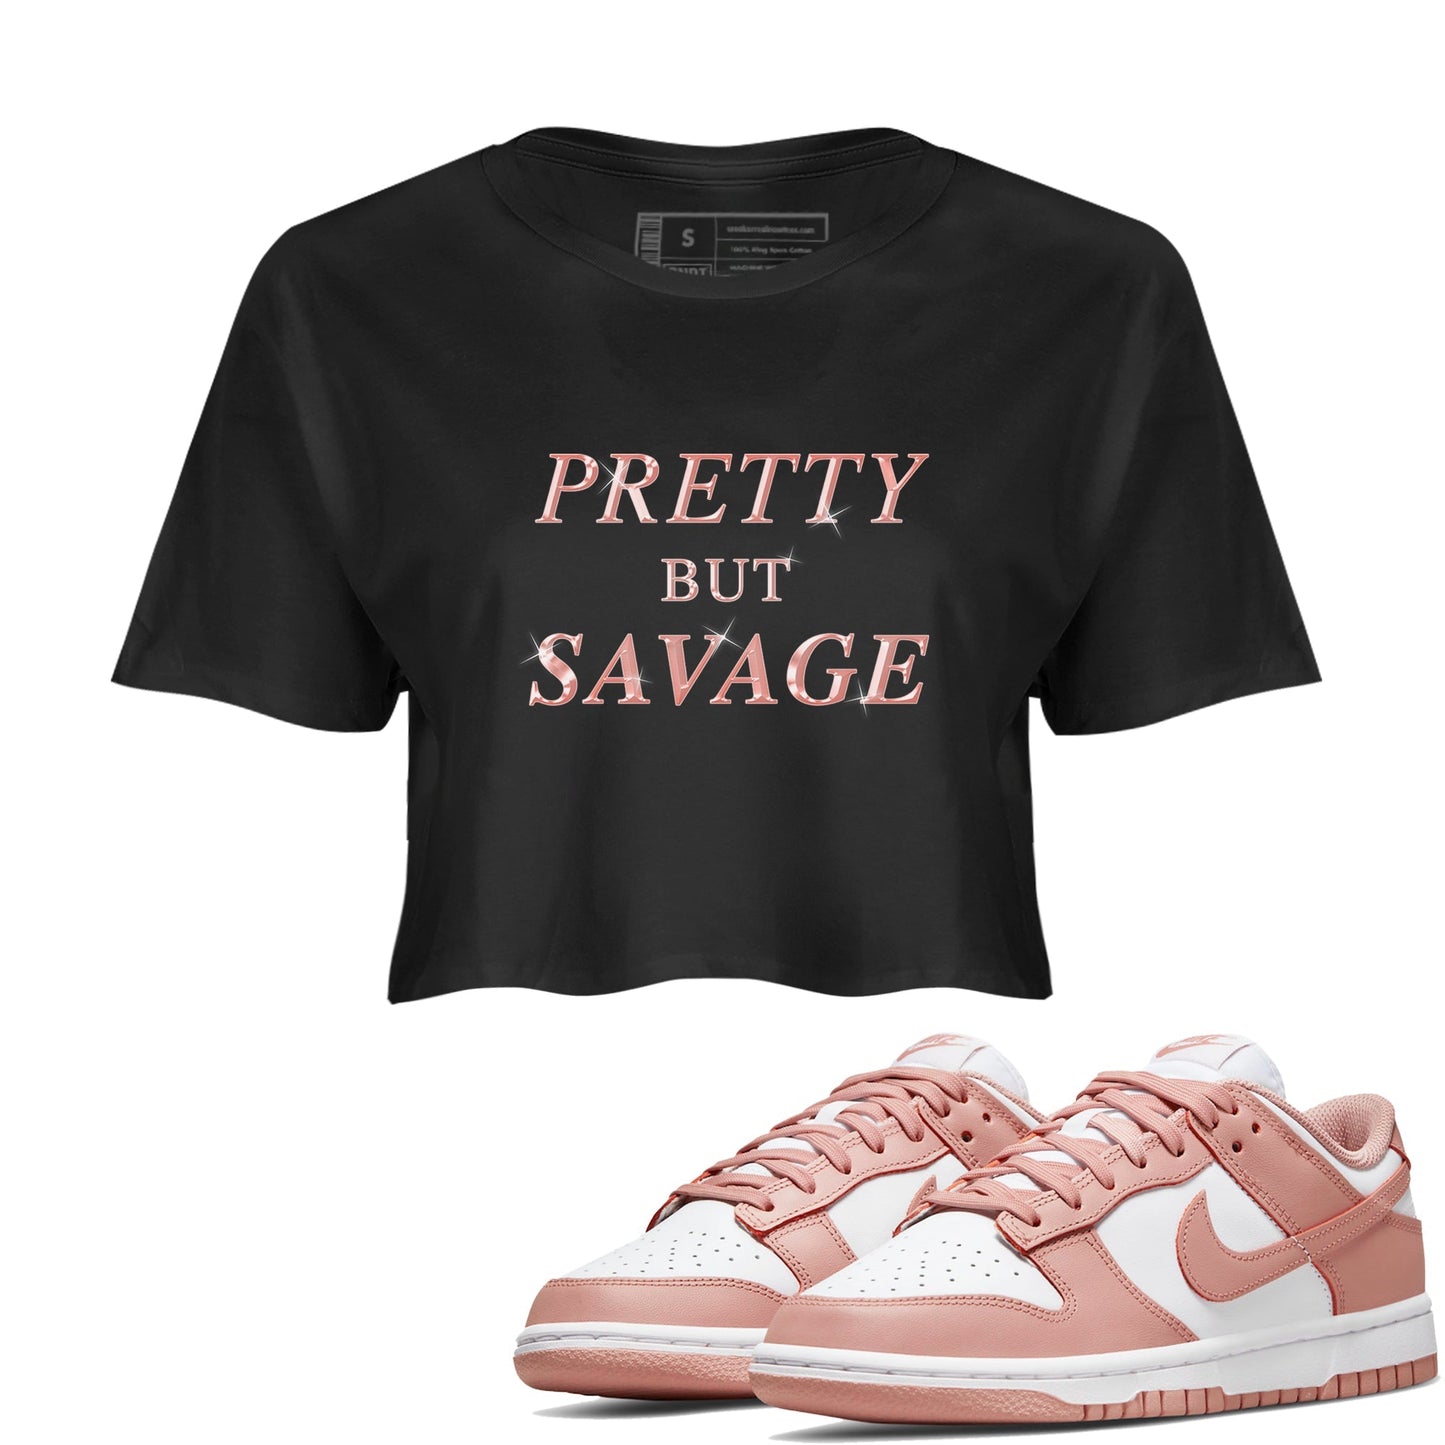 Dunk Rose Whisper shirt to match jordans Pretty But Savage Streetwear Sneaker Shirt Nike Dunk LowRose Whisper Drip Gear Zone Sneaker Matching Clothing Black 1 Crop T-Shirt